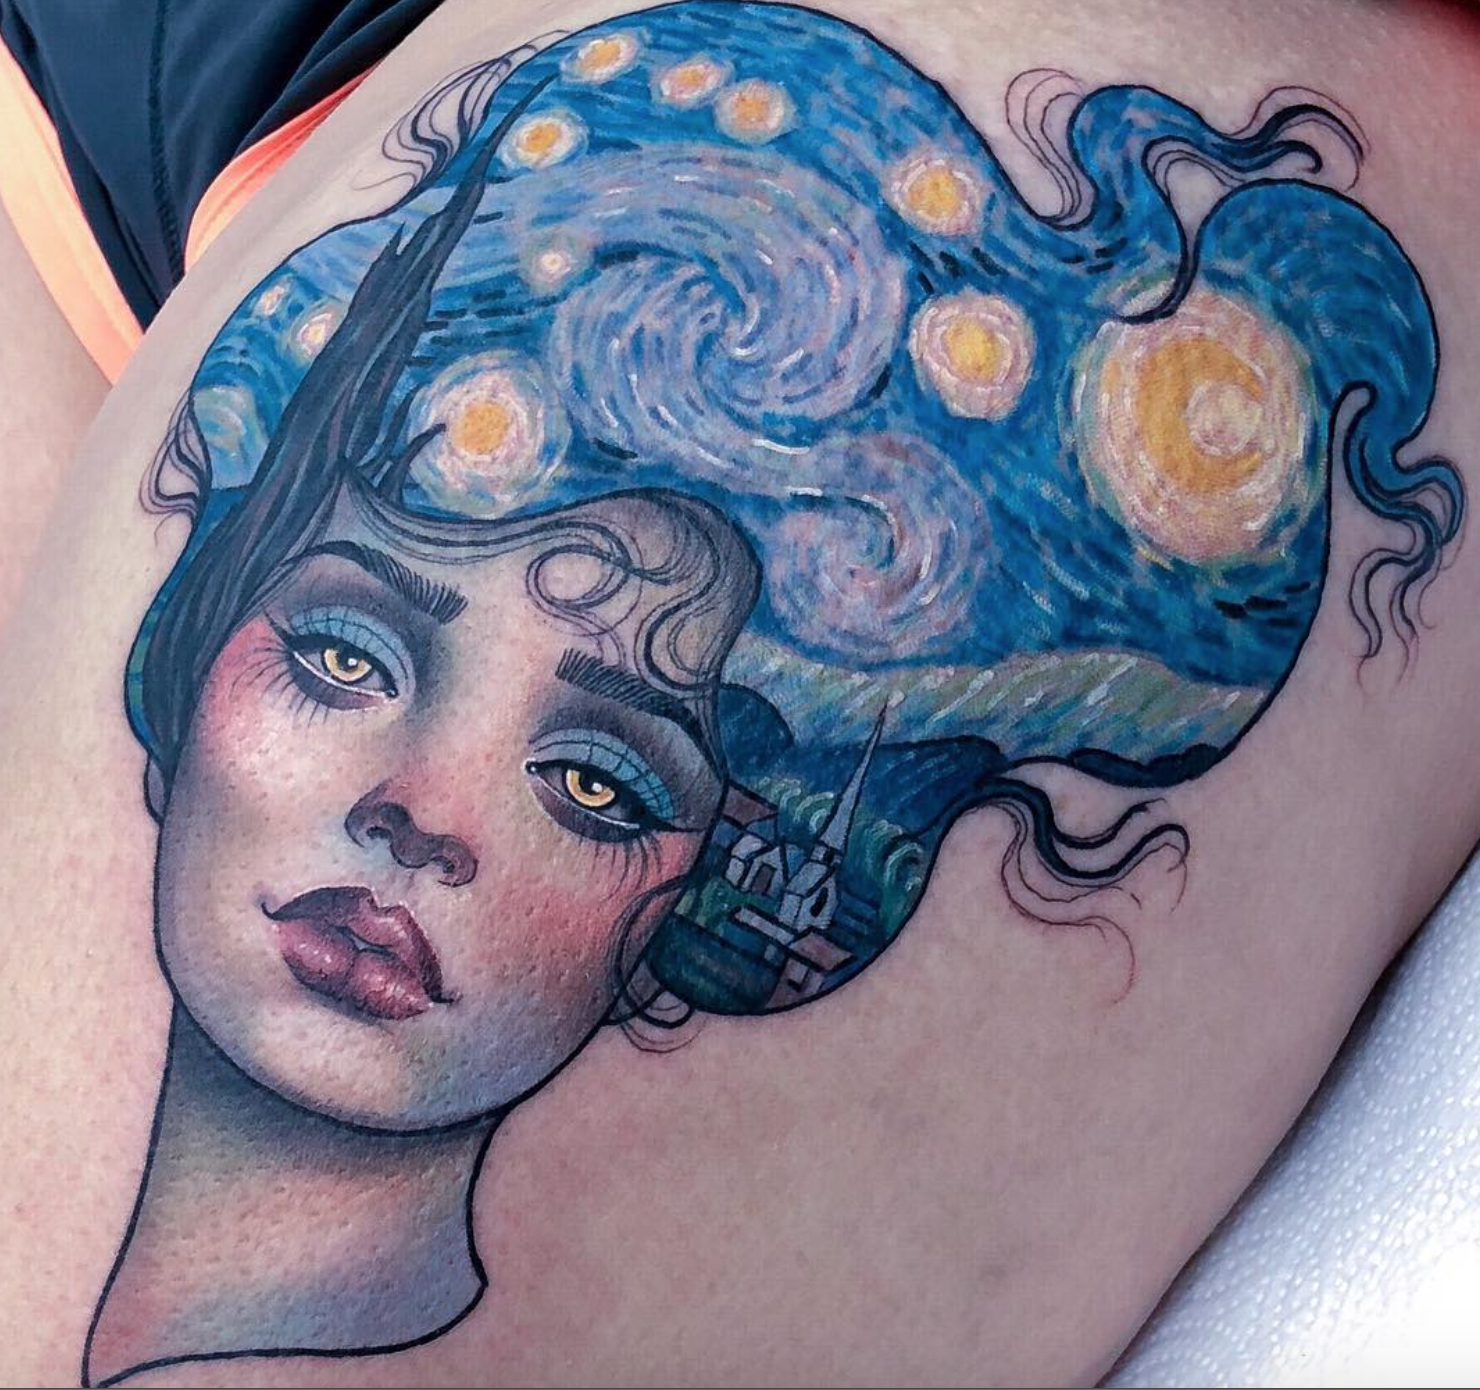 Hannah Flowers Van Gogh tattoo